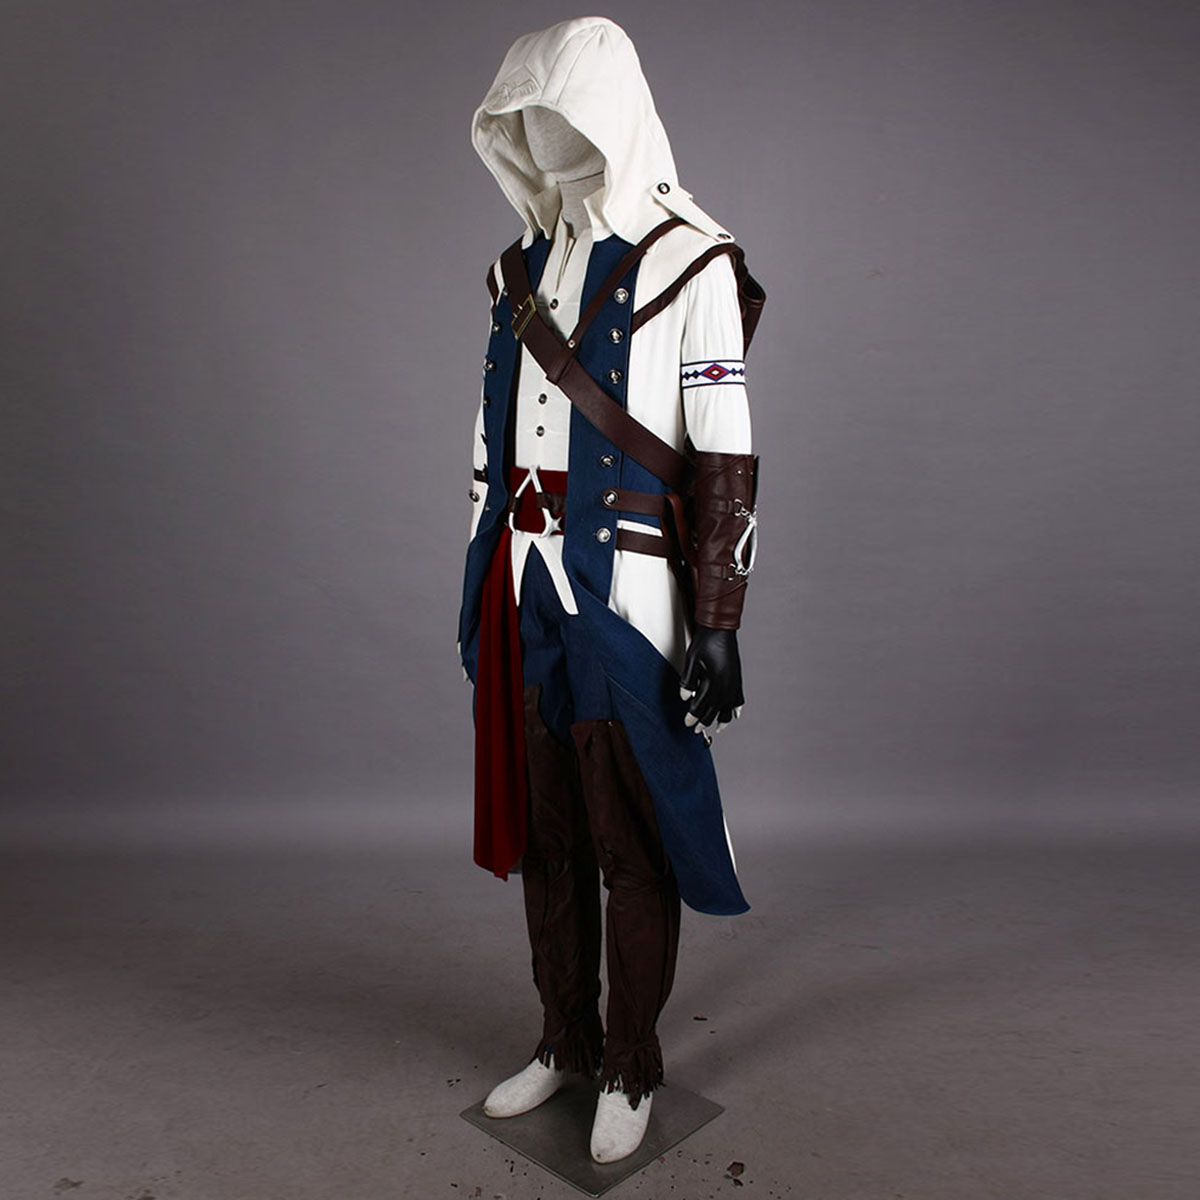 Assassin's Creed III Assassin 8 Cosplay Kostym Sverige